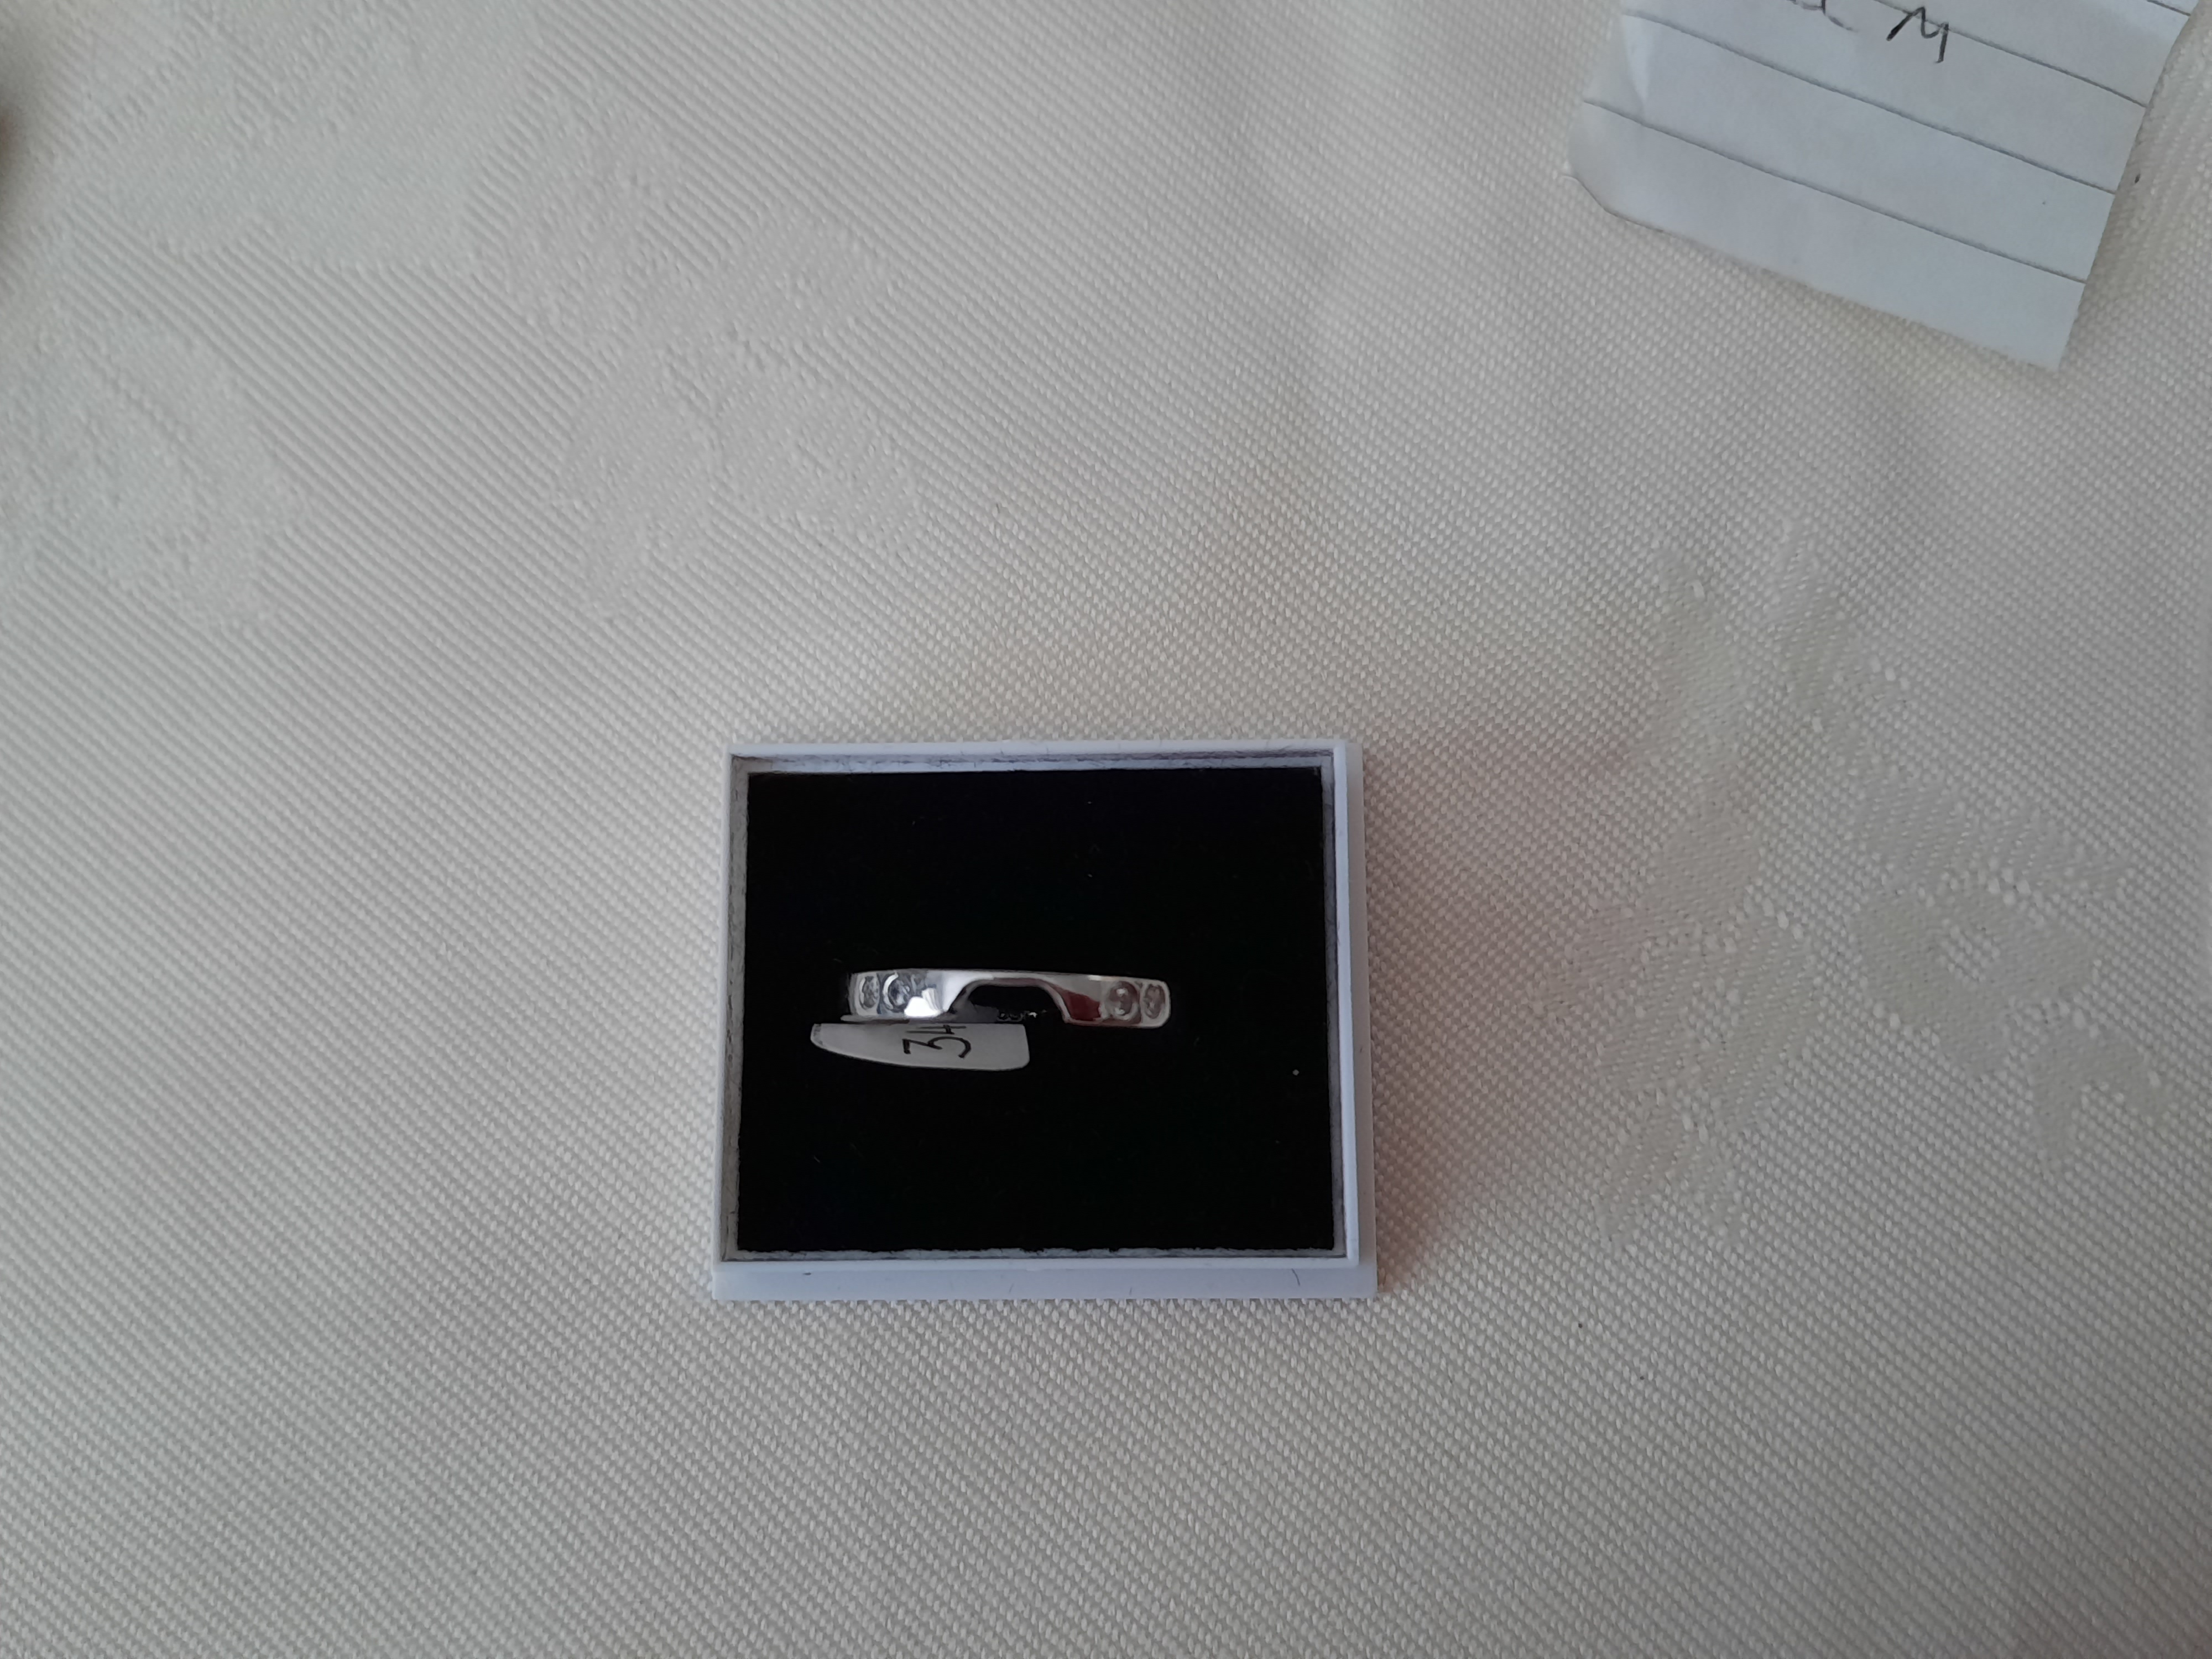 Rhodium Plated Set High Quality Cz Fancy Wishbone Shaped Wedding/Dress Ring. Size M RRP £89 - Image 3 of 3